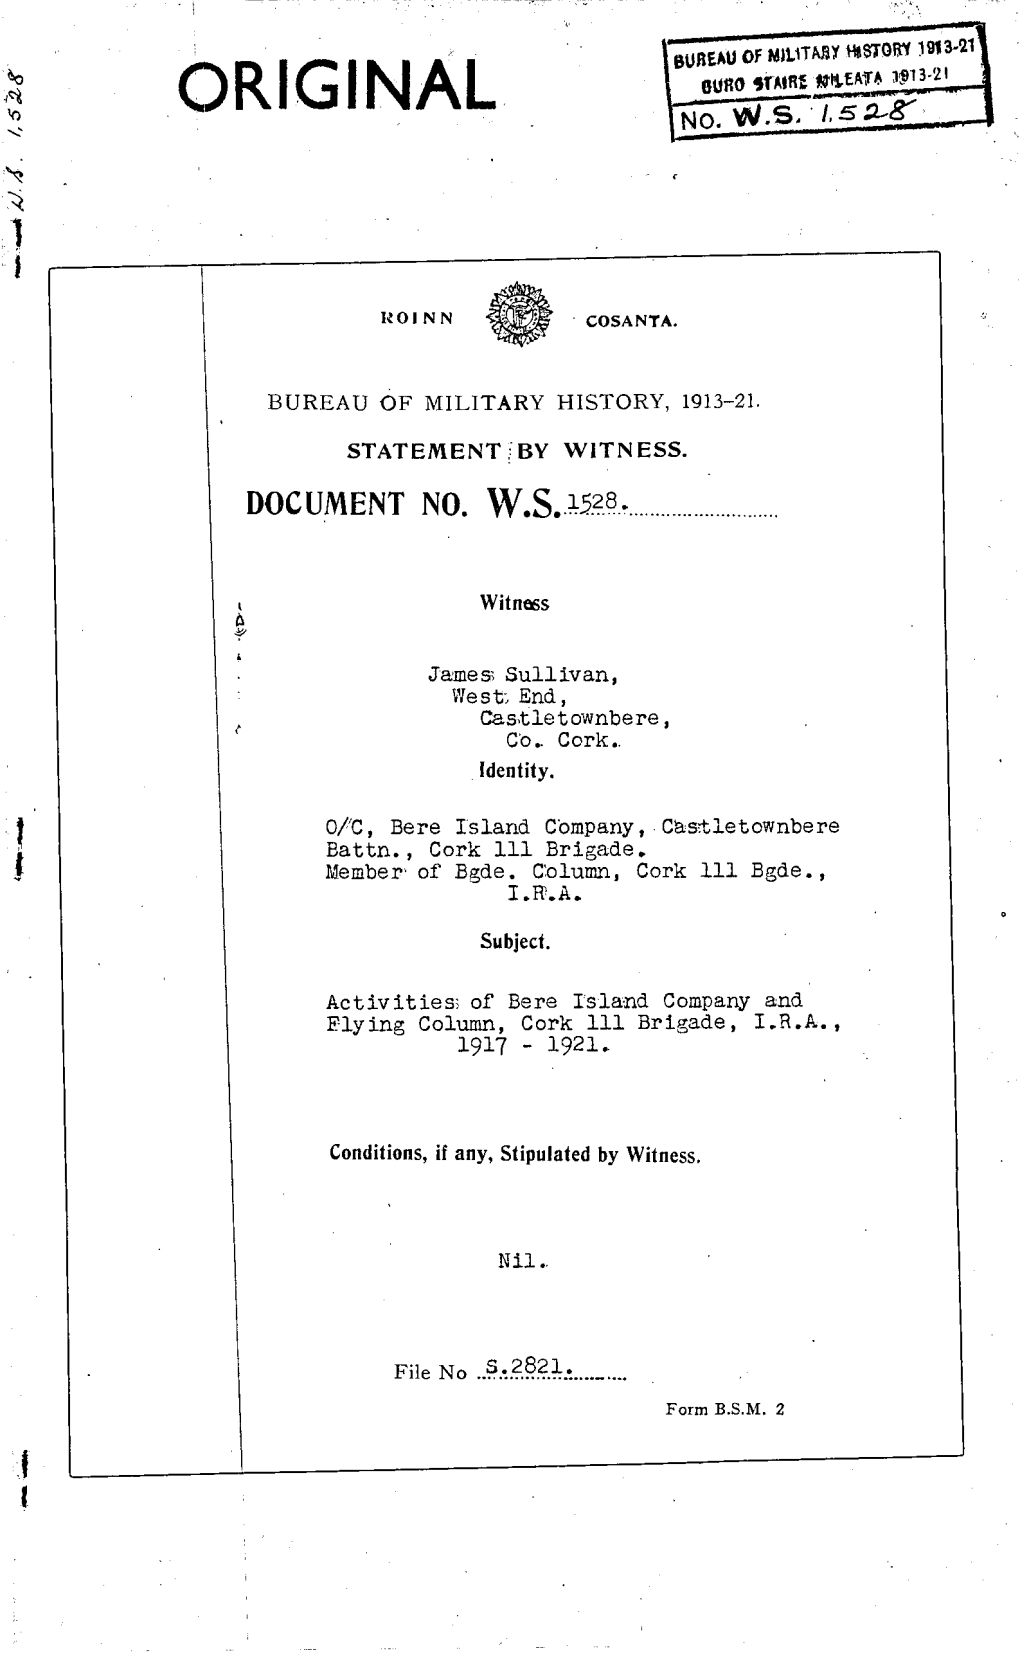 ROINN COSANTA. BUREAU of MILITARY HISTORY, 1913-21. STATEMENT by WITNESS. DOCUMENT NO. W.S. 1528. Witness James Sullivan, West E